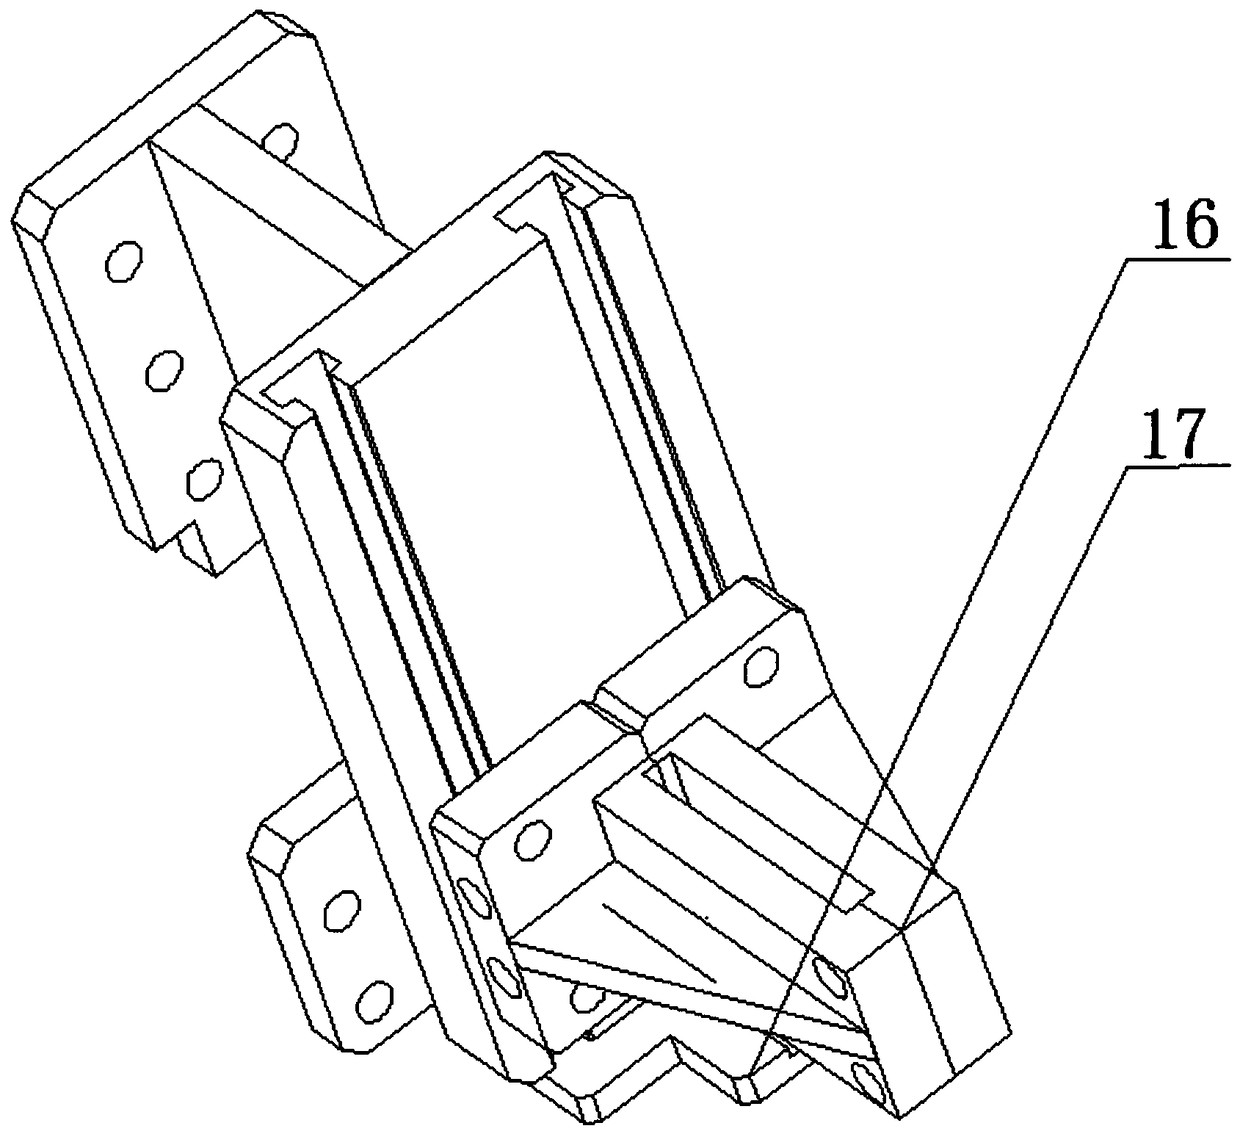 A torque loading device for a servo mechanism